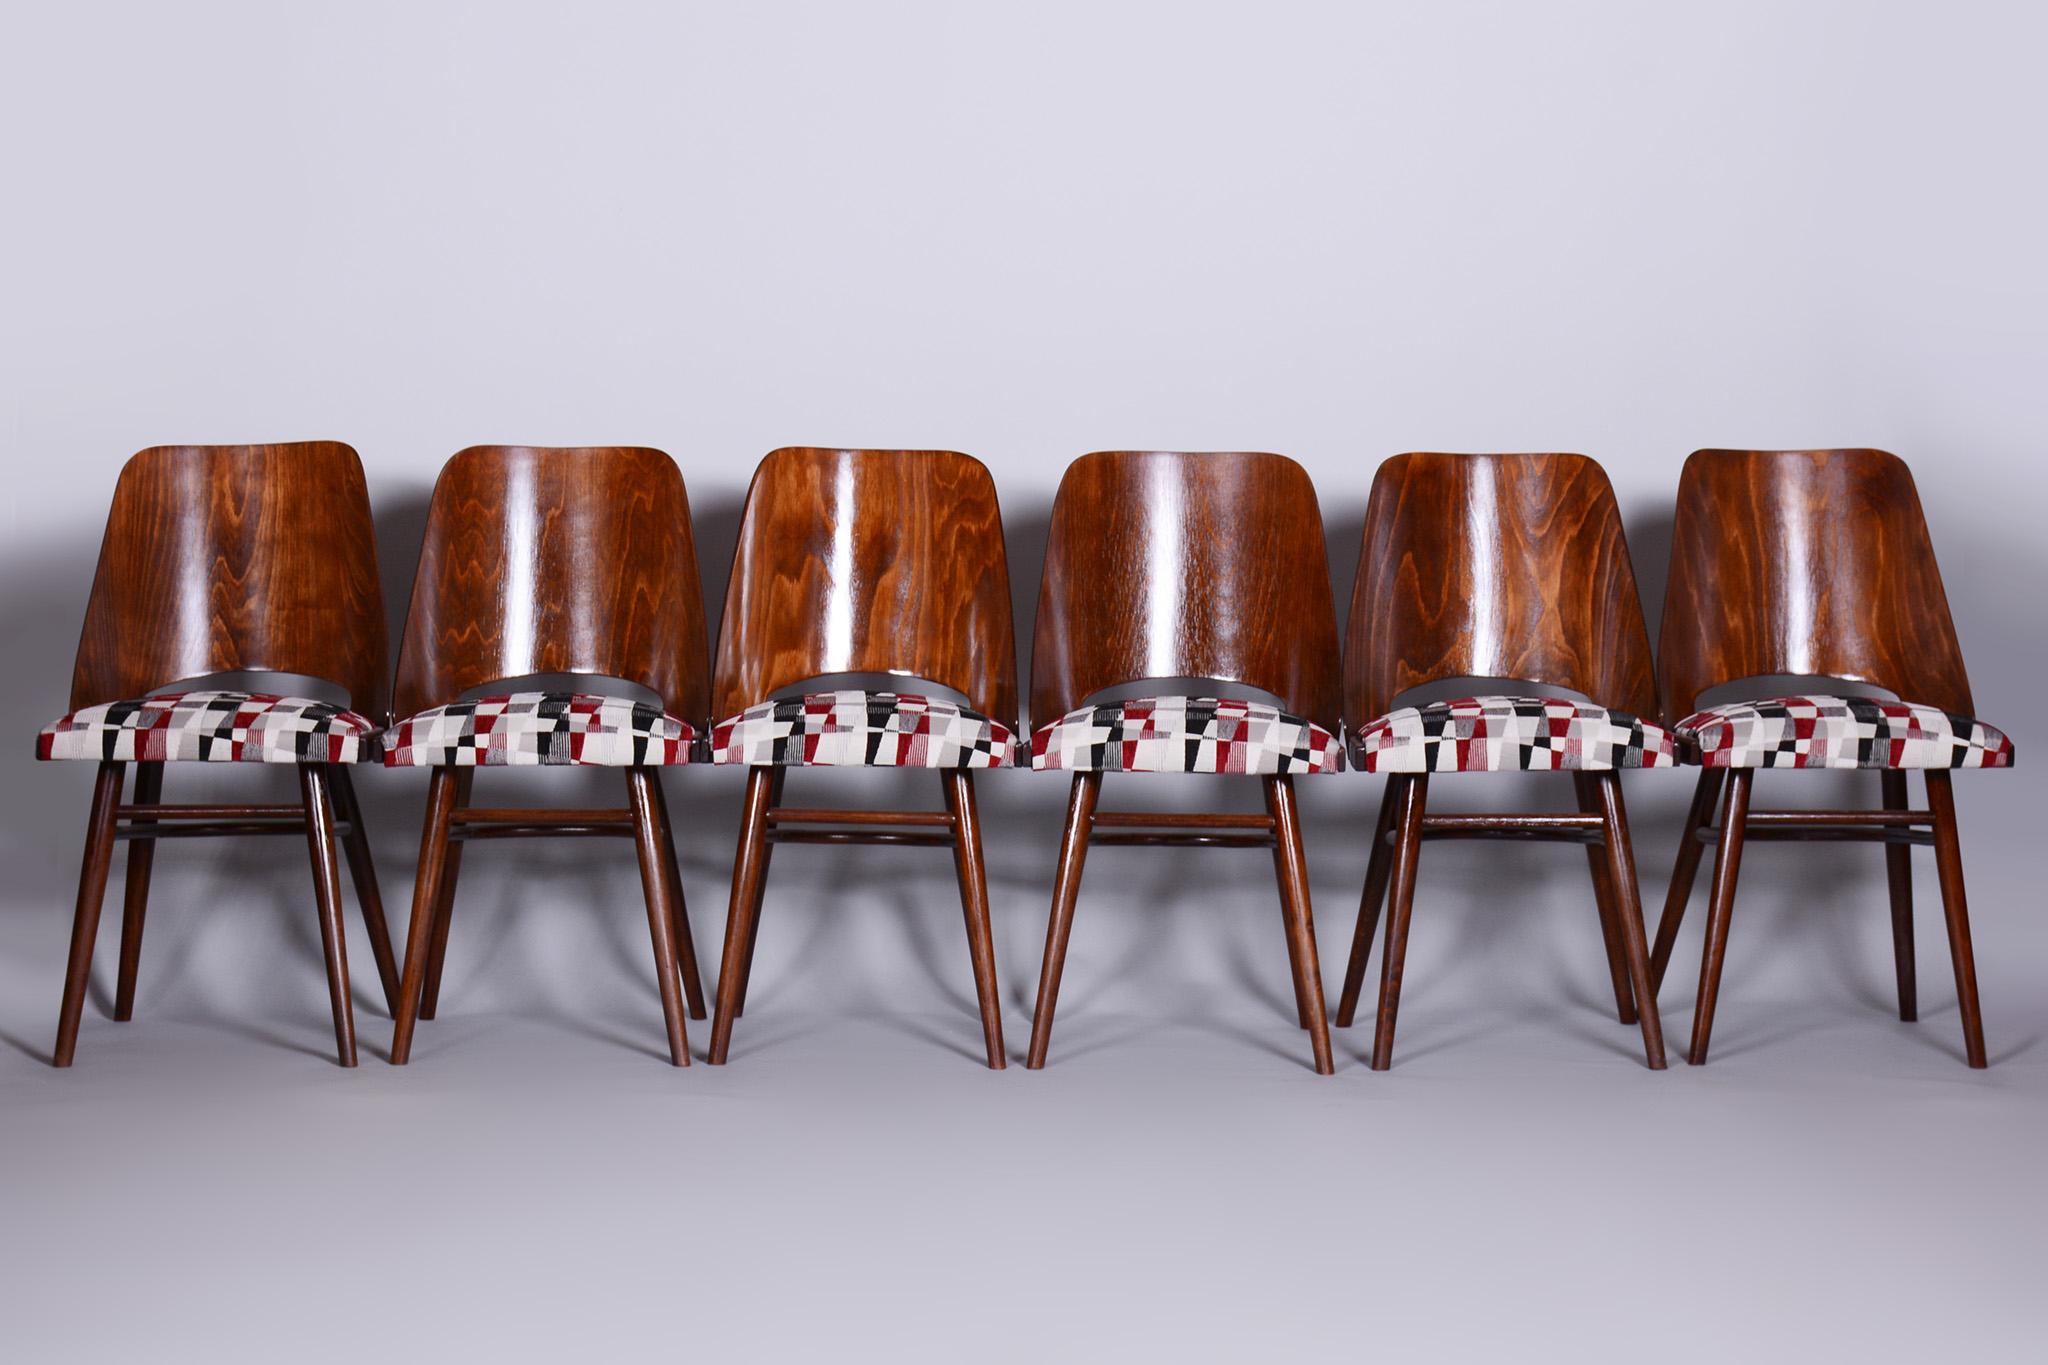 Set of Six Midcentury Beech Chairs, Oswald Heardtl, Restored, Czechia, 1950s For Sale 2